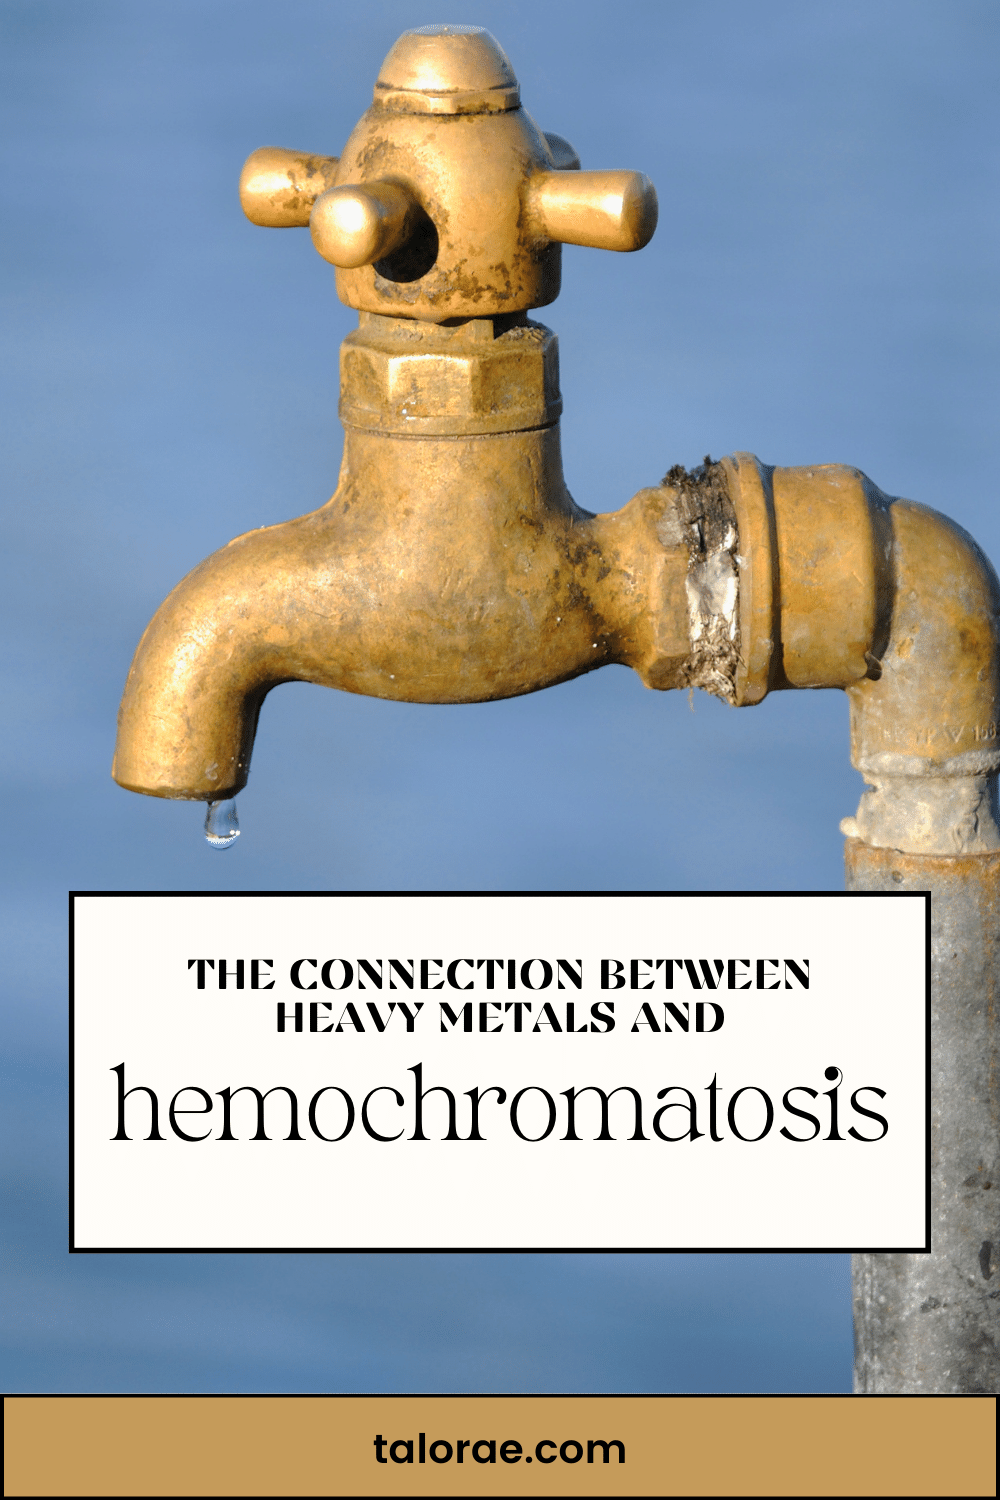 heavy metals and hemochromatosis pin